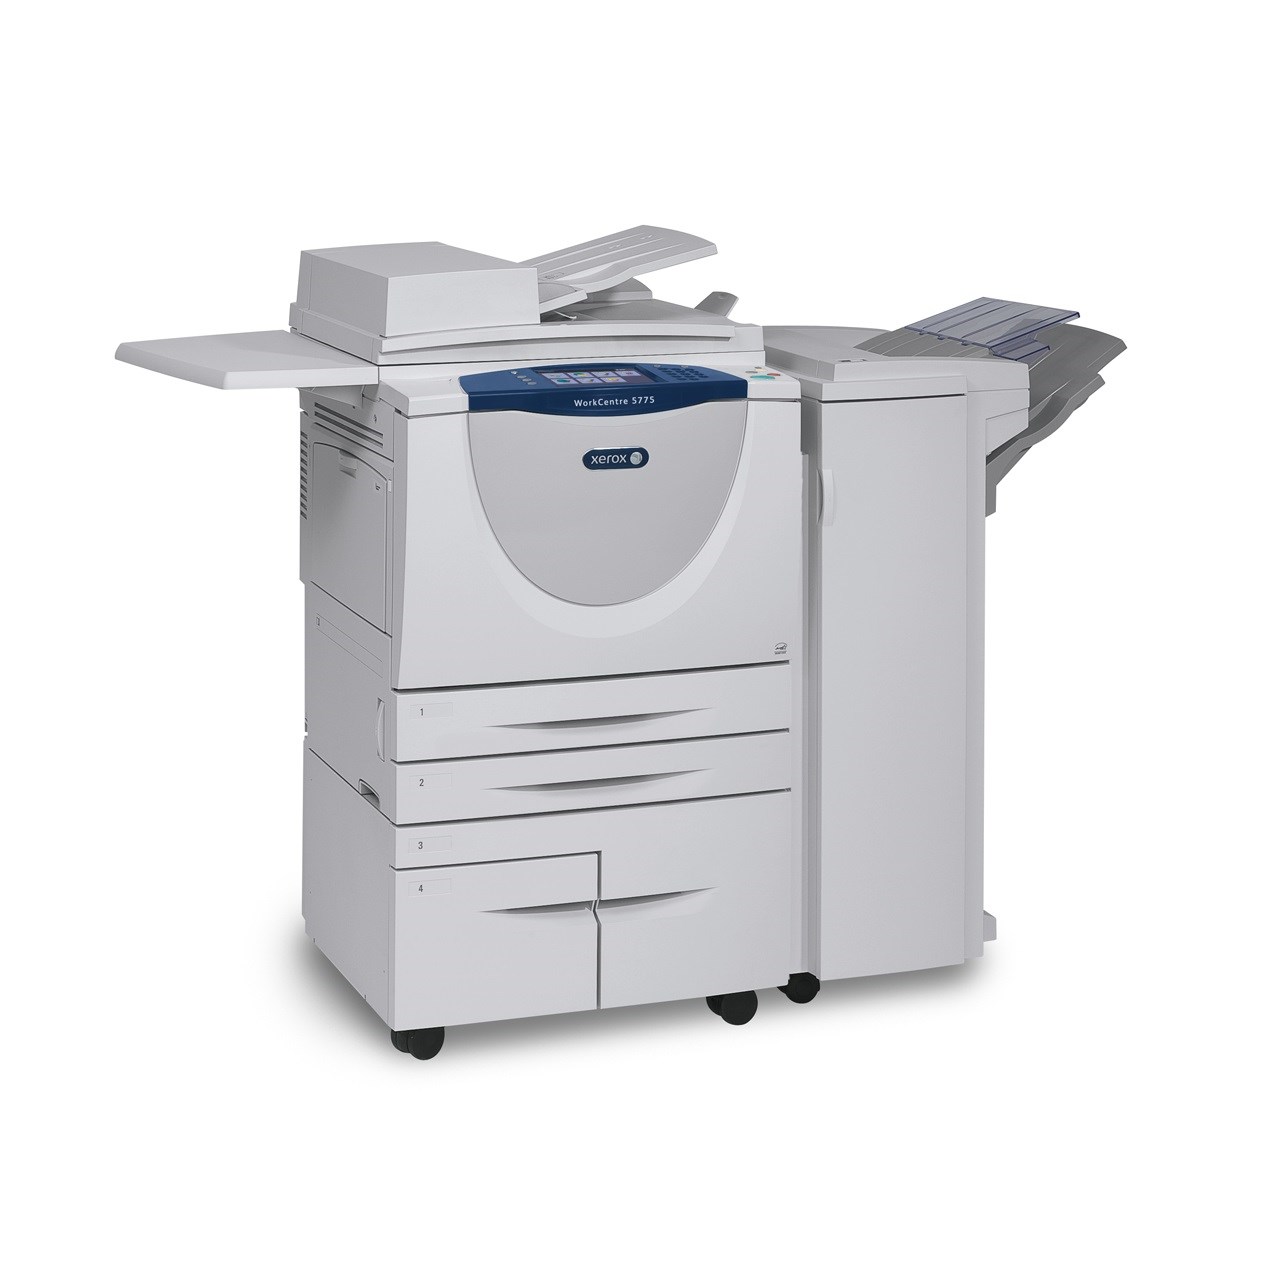  دستگاه کپی لیزری زیراکس مدل WorkCentre 5745 Multifunction Printer